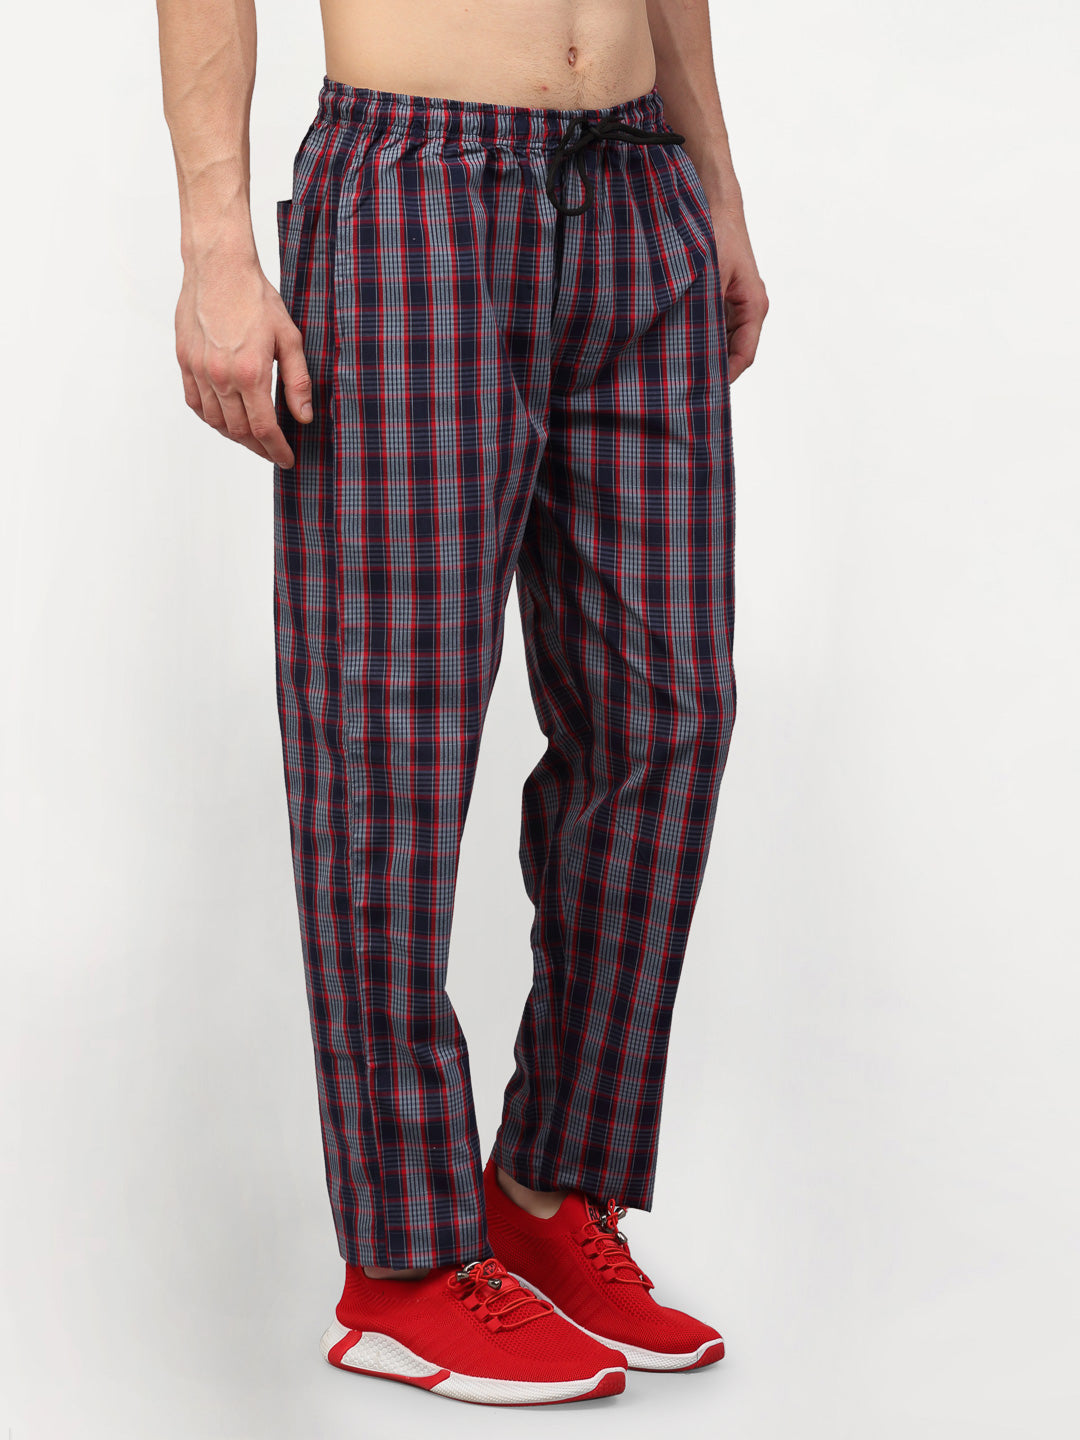 Buy Jockey Women's Pajama Pant, Green Plaid, Medium at Amazon.in